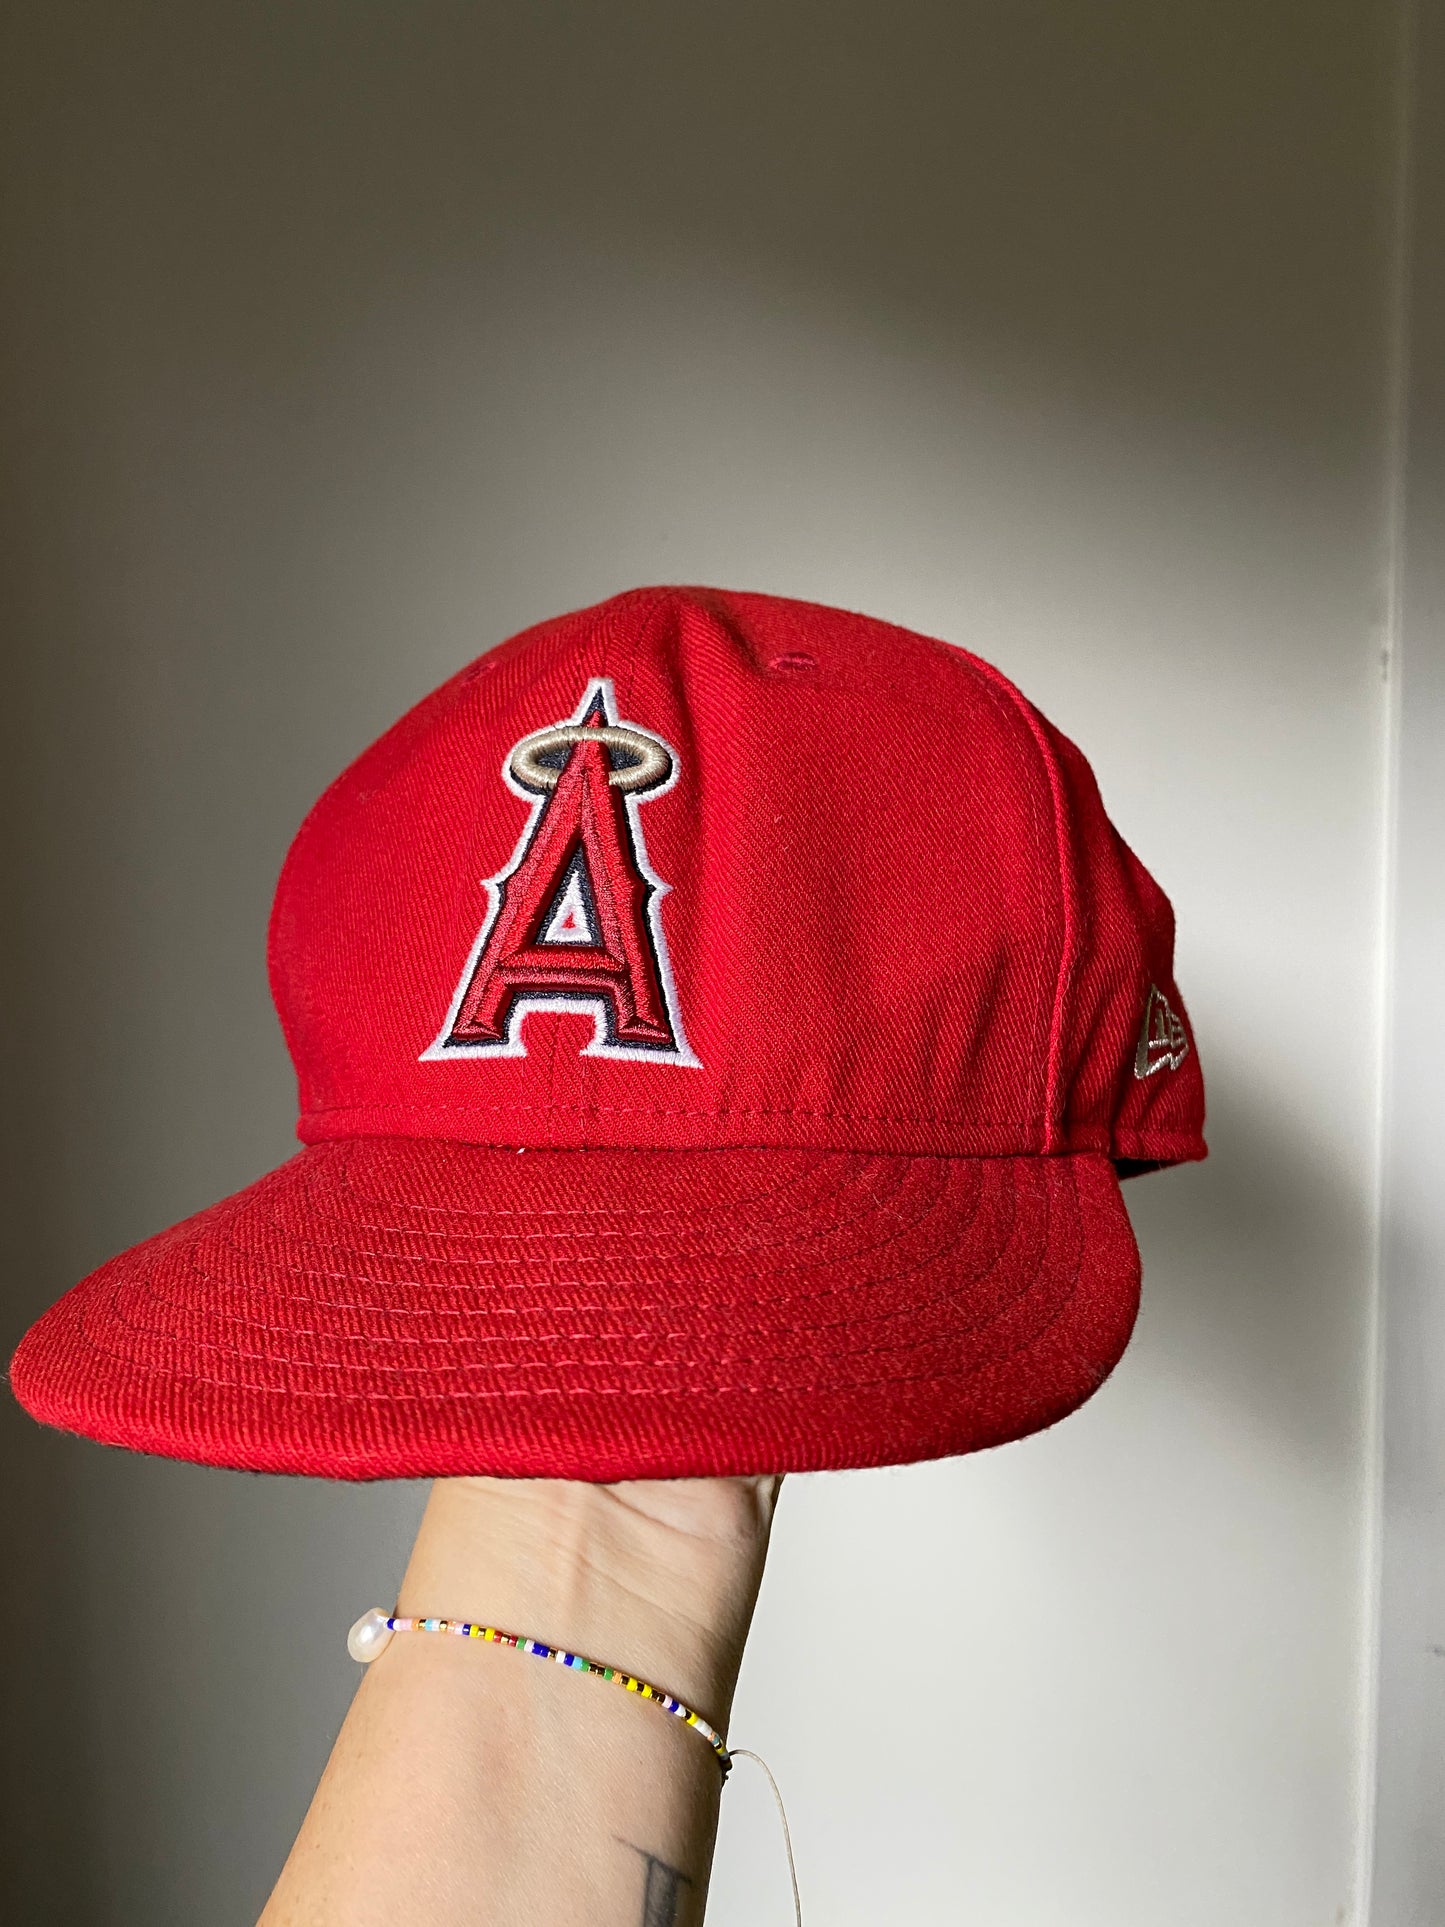 Los Angeles Angels Baseball Cap